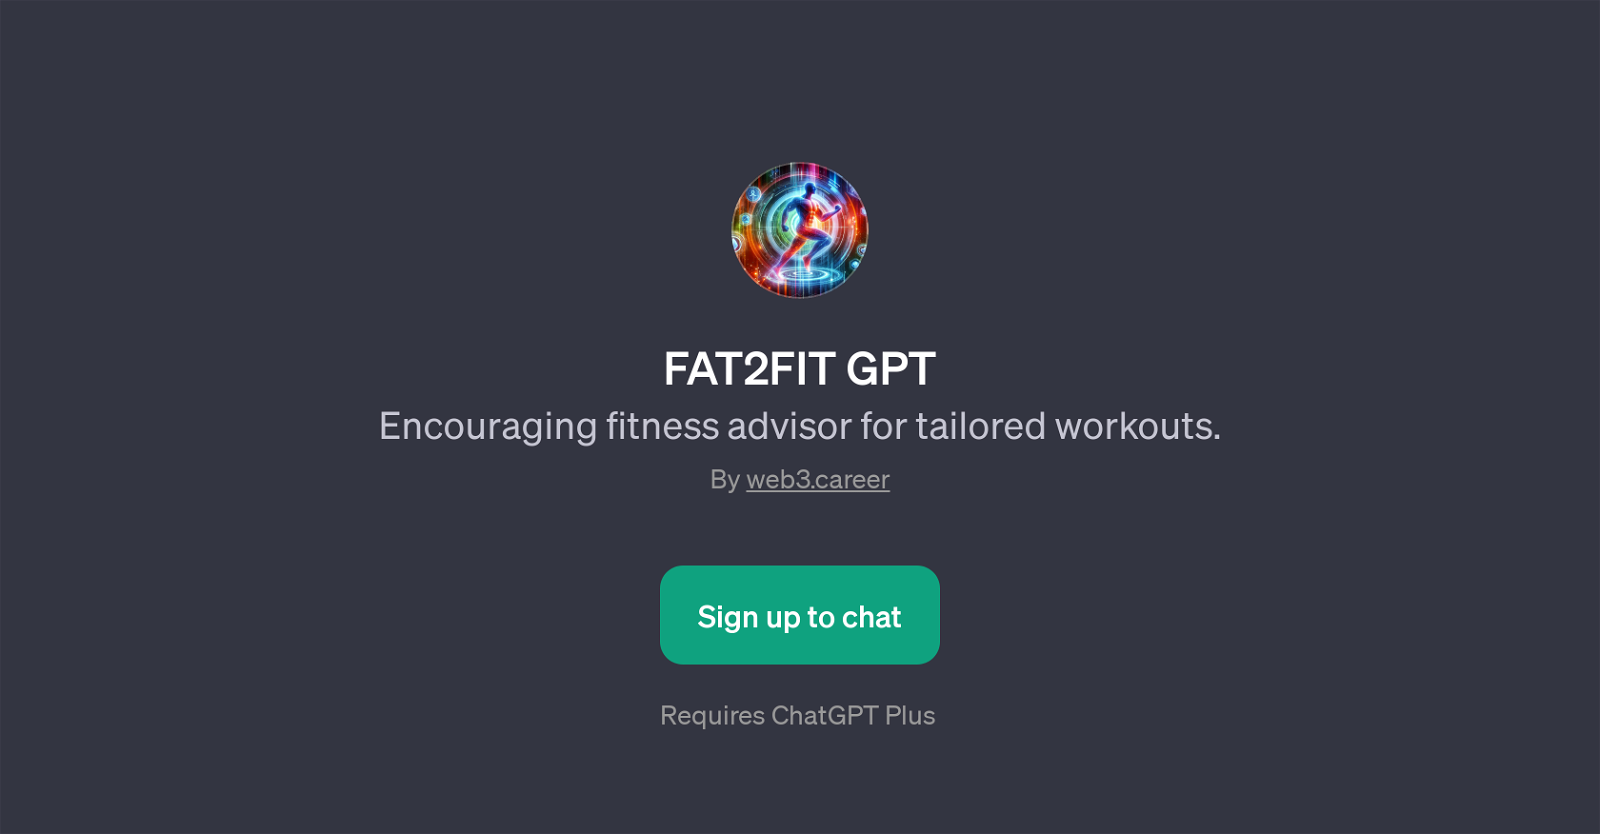 FAT2FIT GPT website